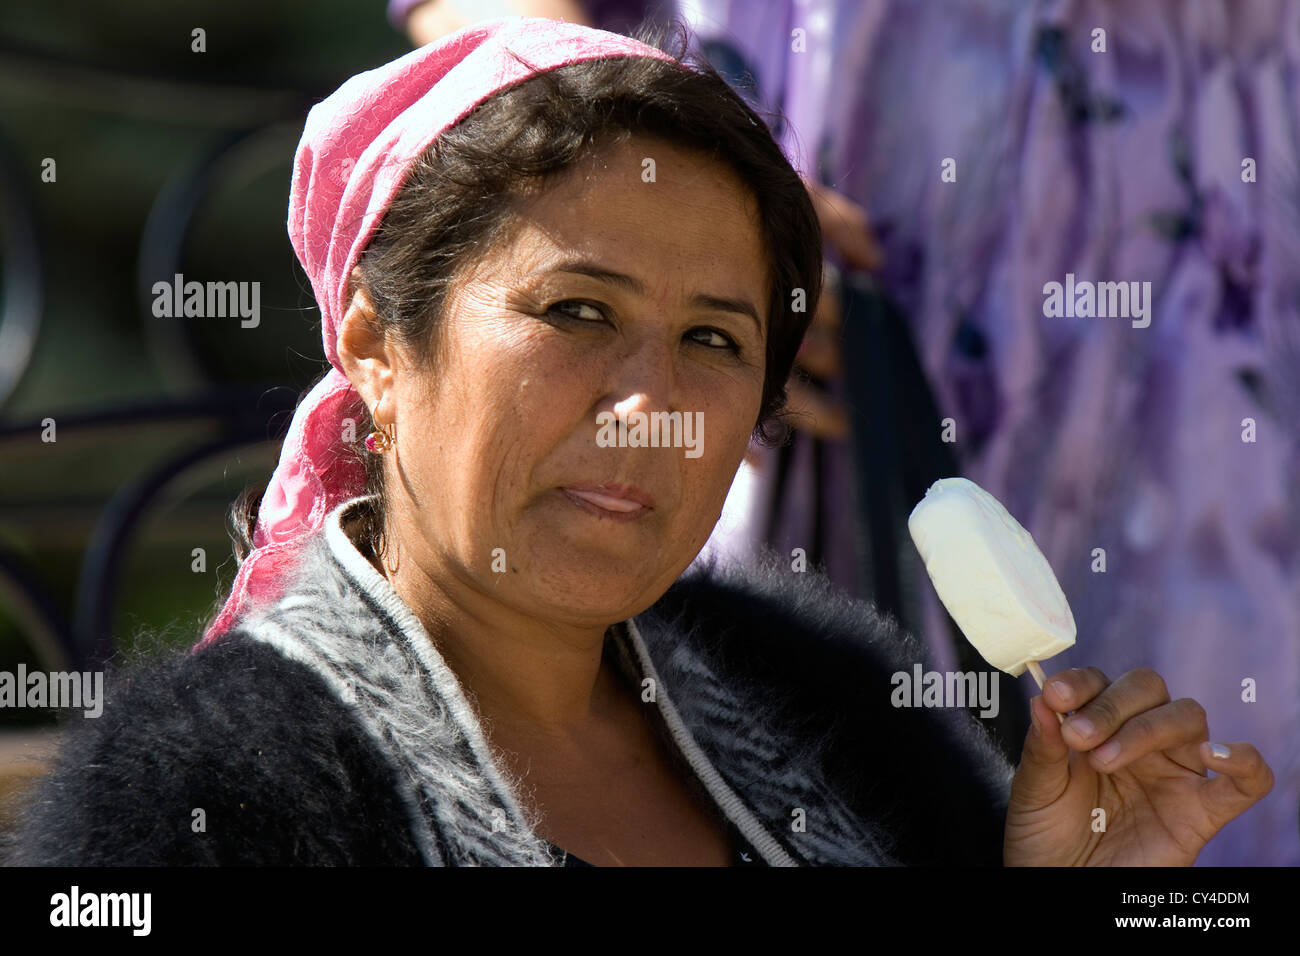 Uzbek woman having fun and dancing, Samarkand, Uzbekistan Stock Photo